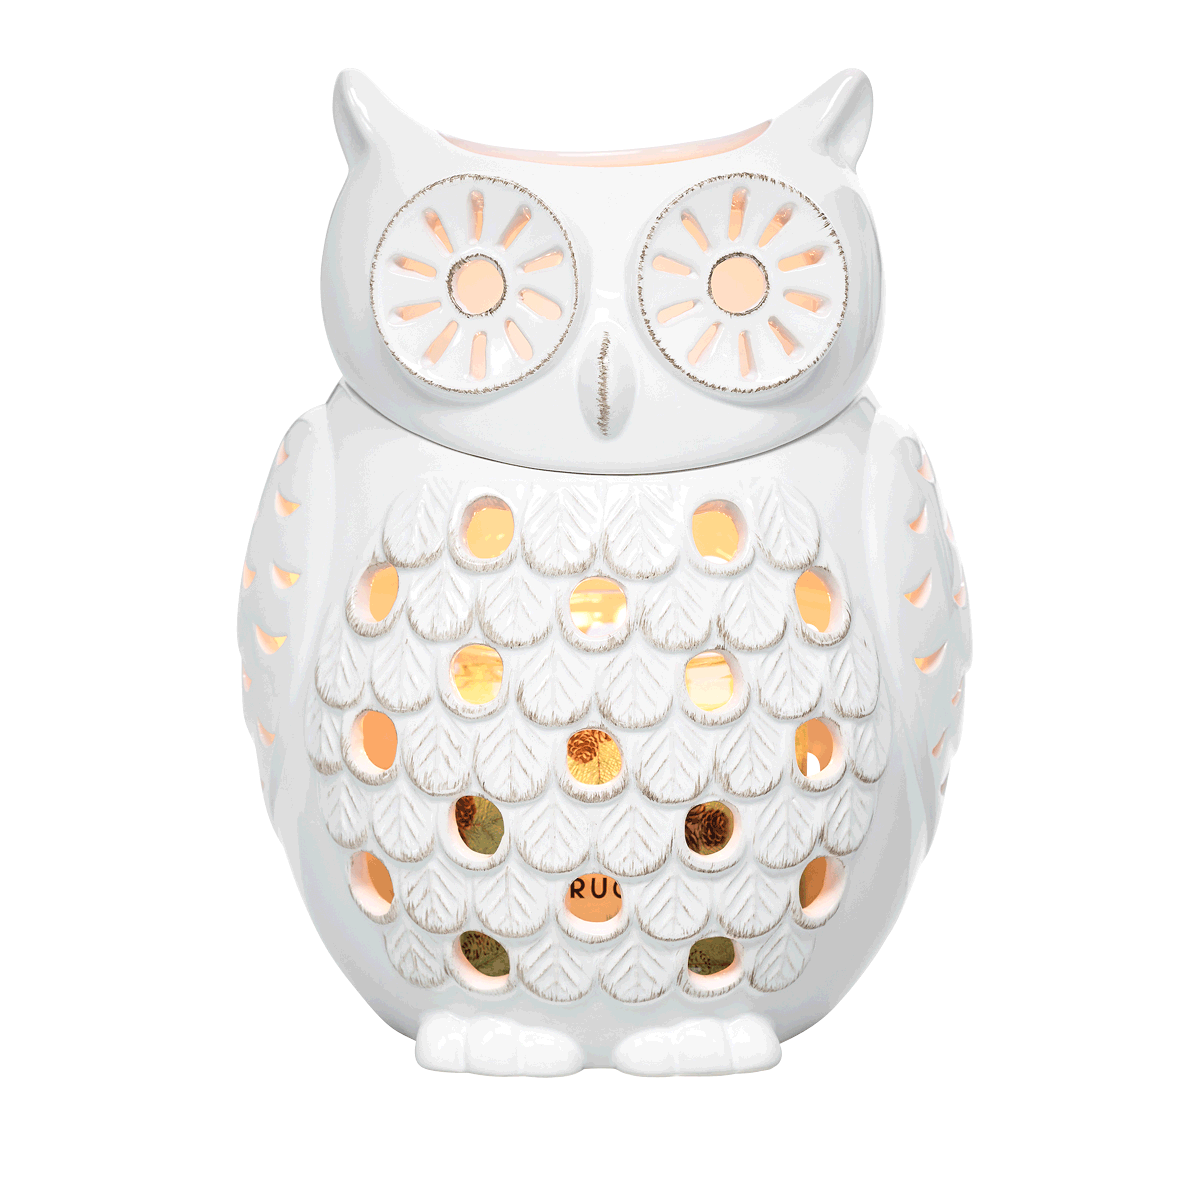 Woodland Snow Owl Jar Candle Holder - PartyLite US